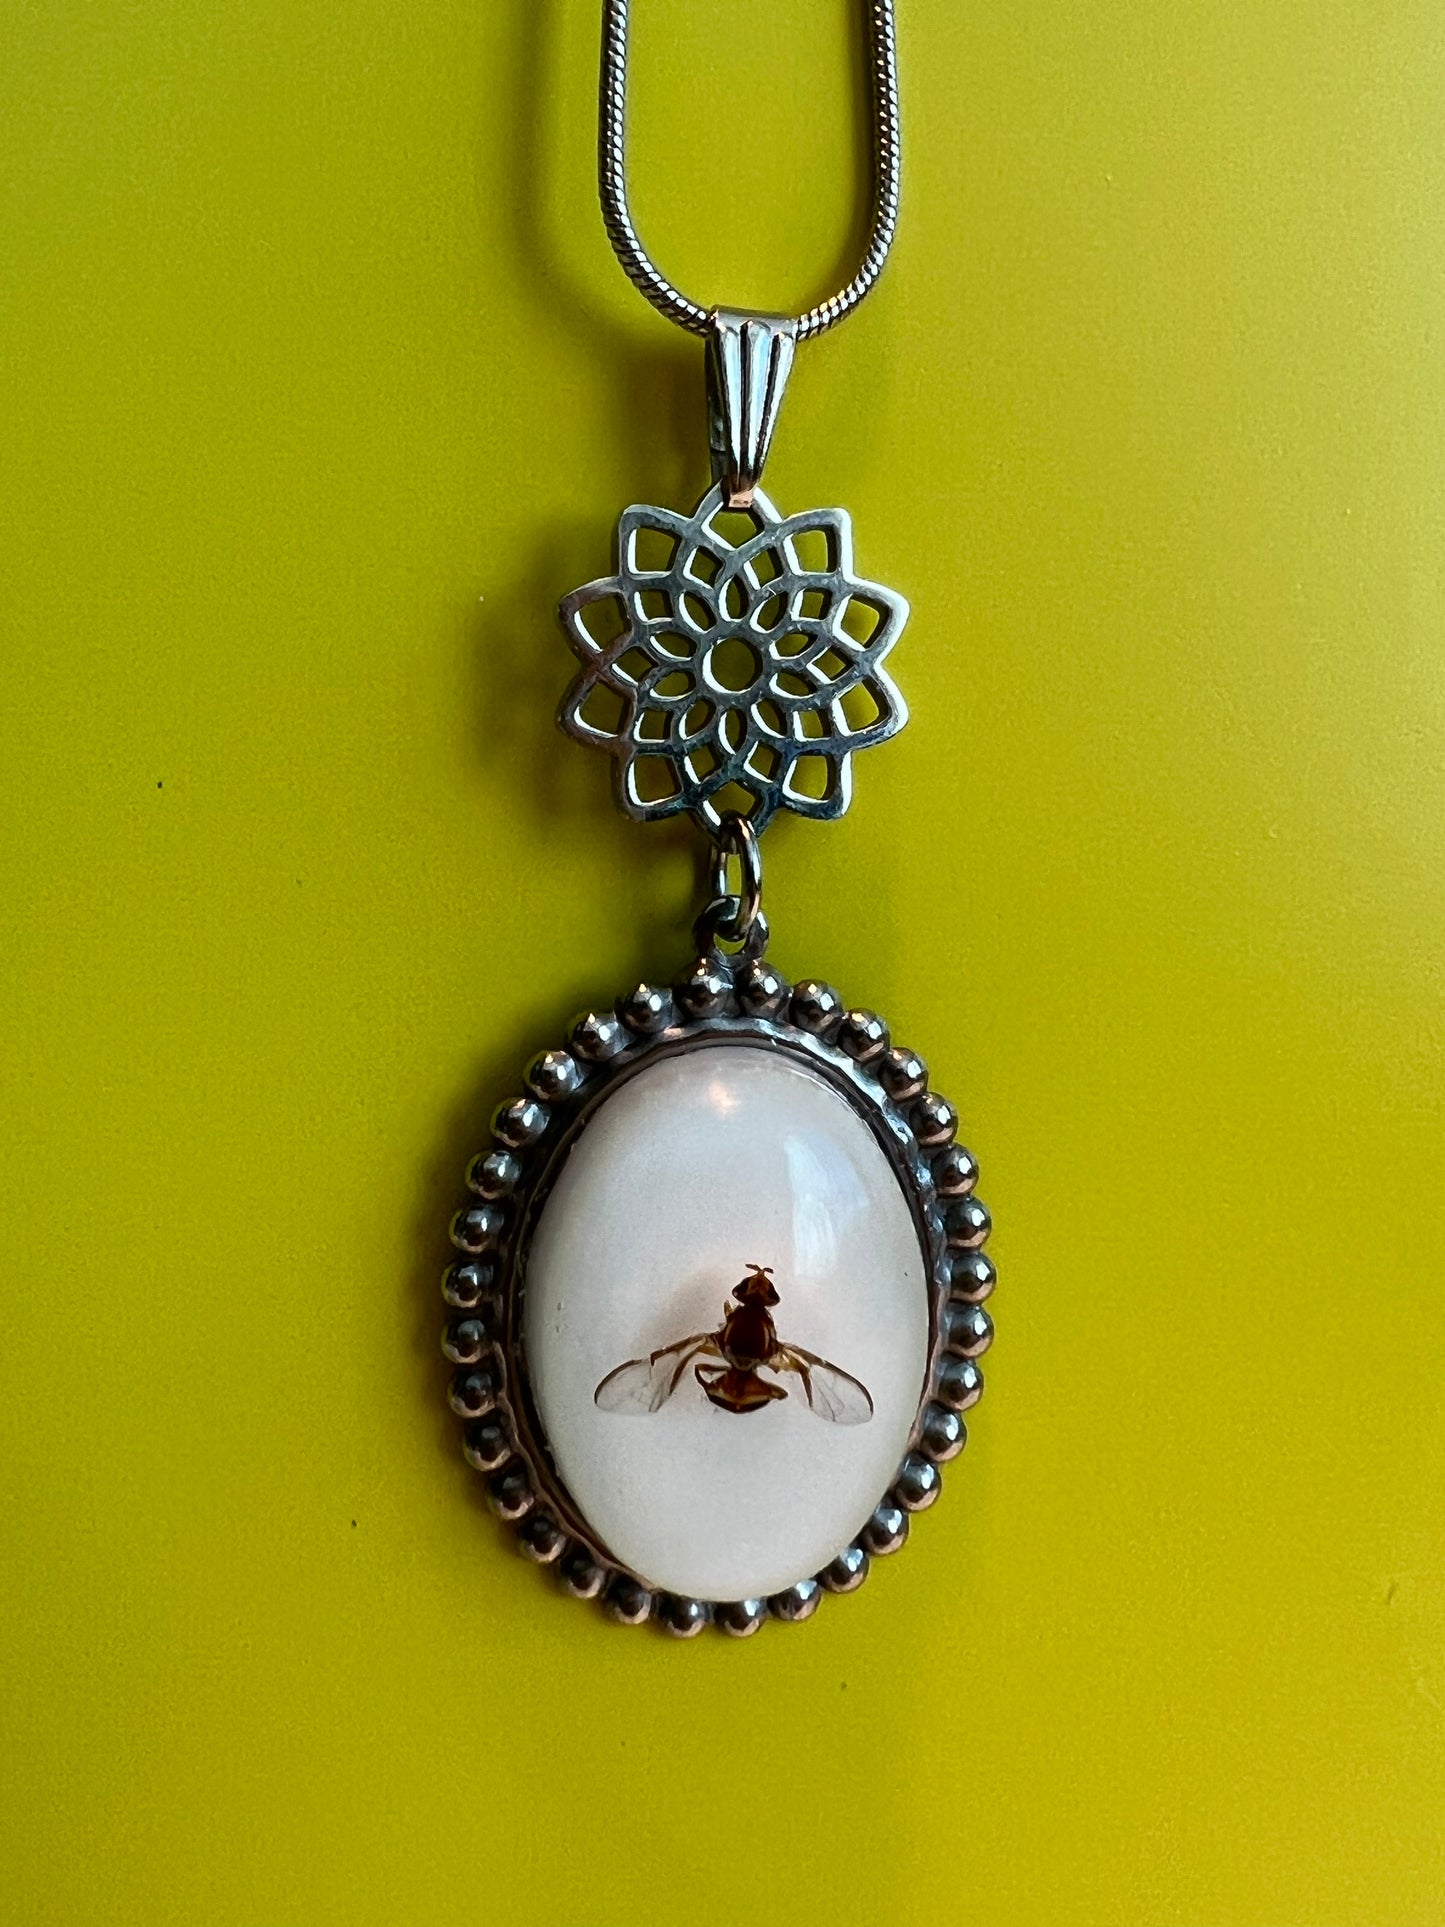 QLD Fruit Fly antique pendant